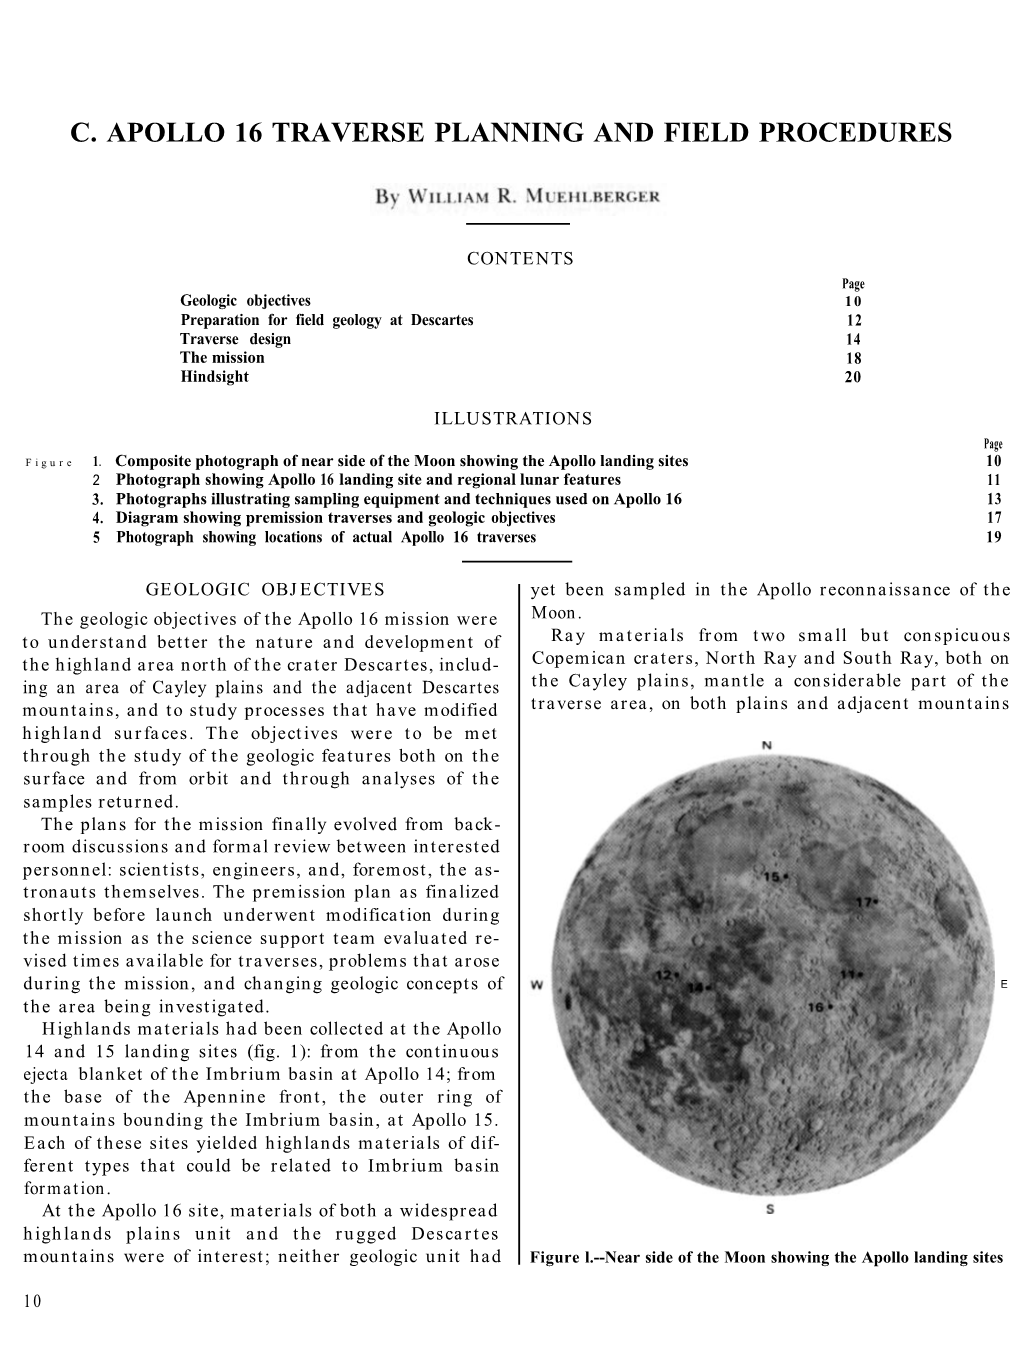 C. Apollo 16 Traverse Planning and Field Procedures